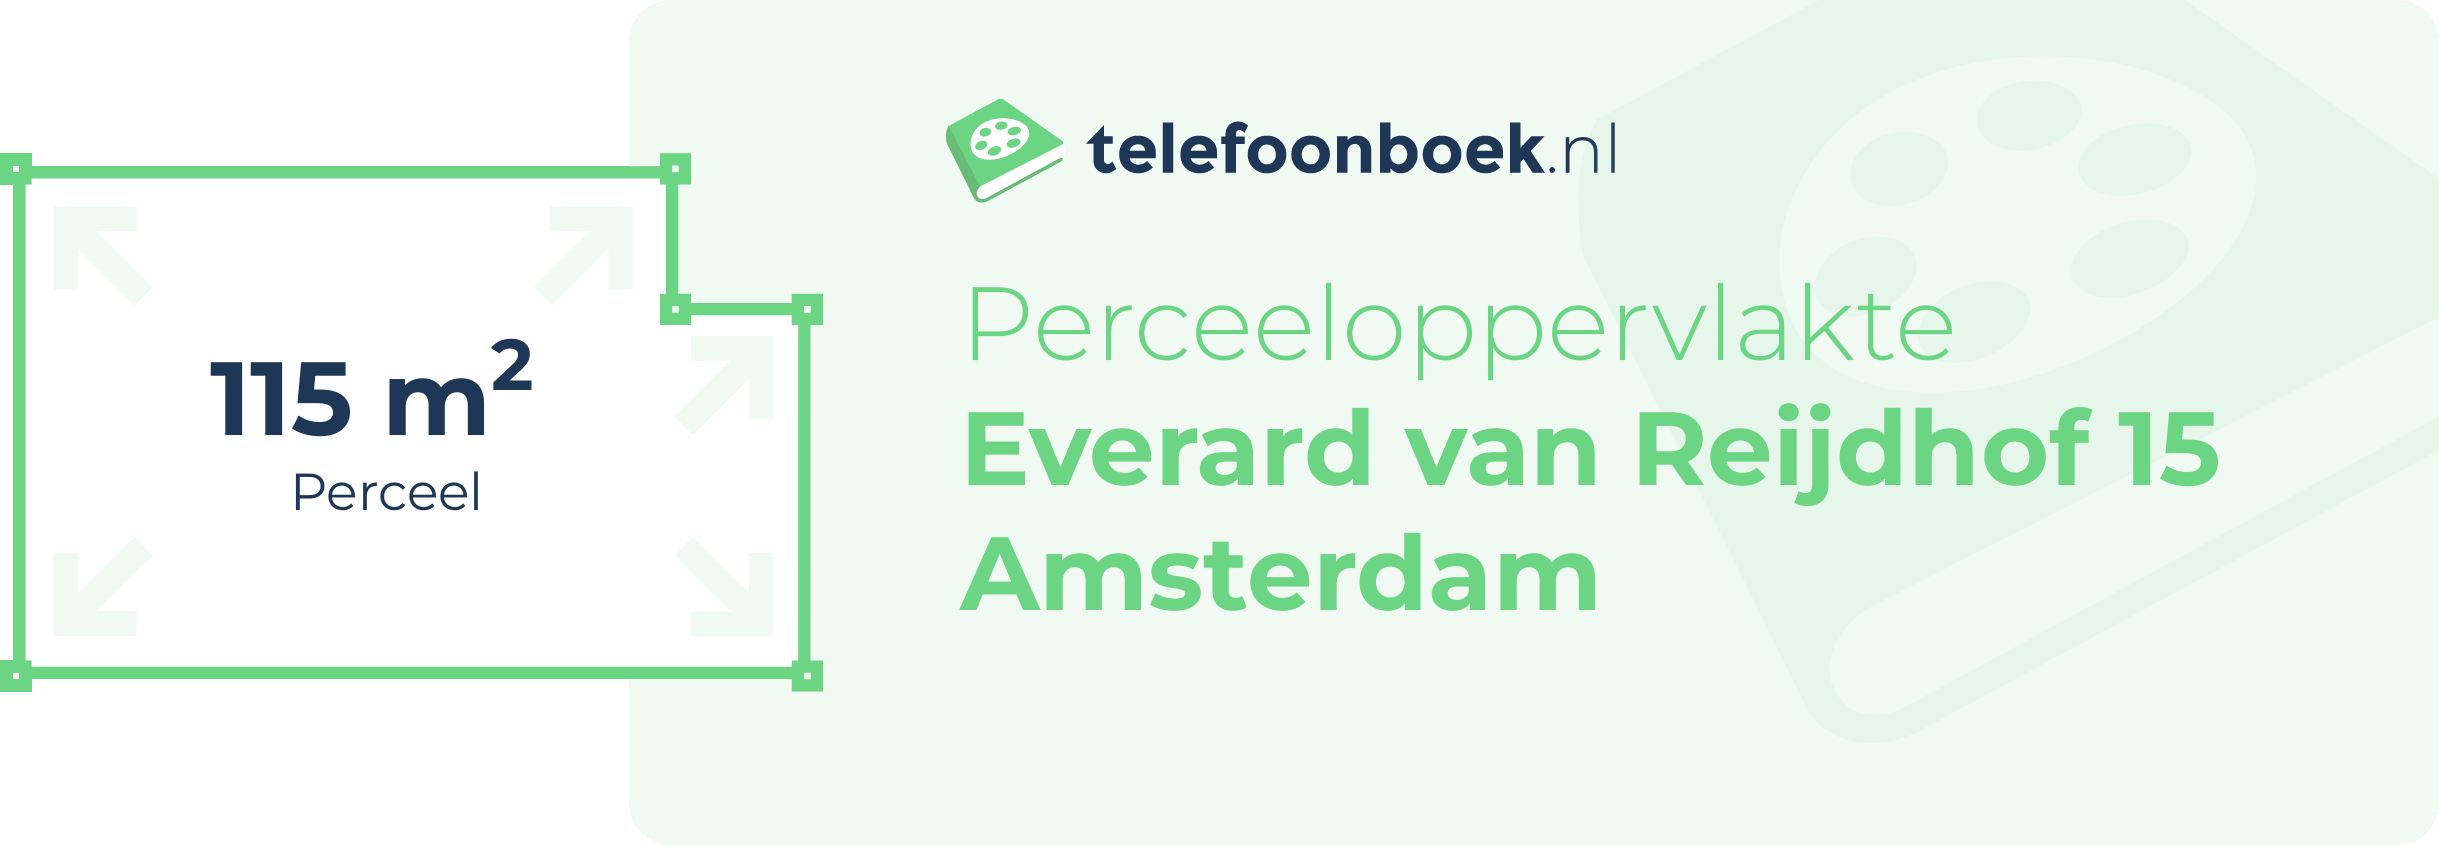 Perceeloppervlakte Everard Van Reijdhof 15 Amsterdam